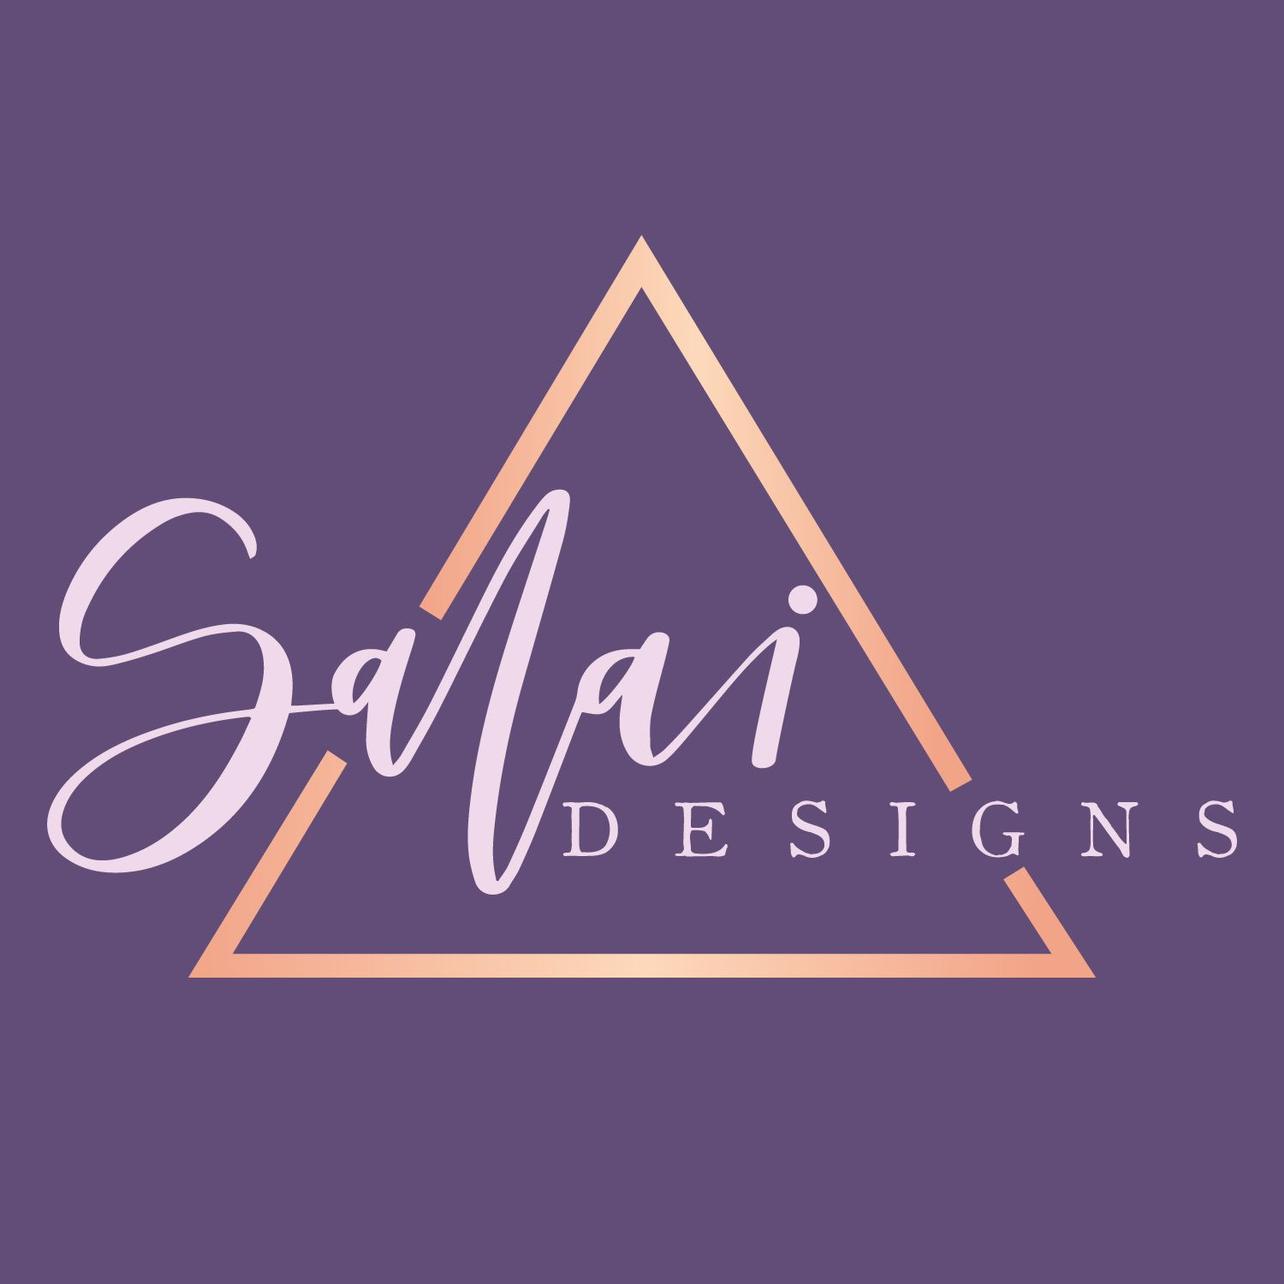 salaisdesigns's images